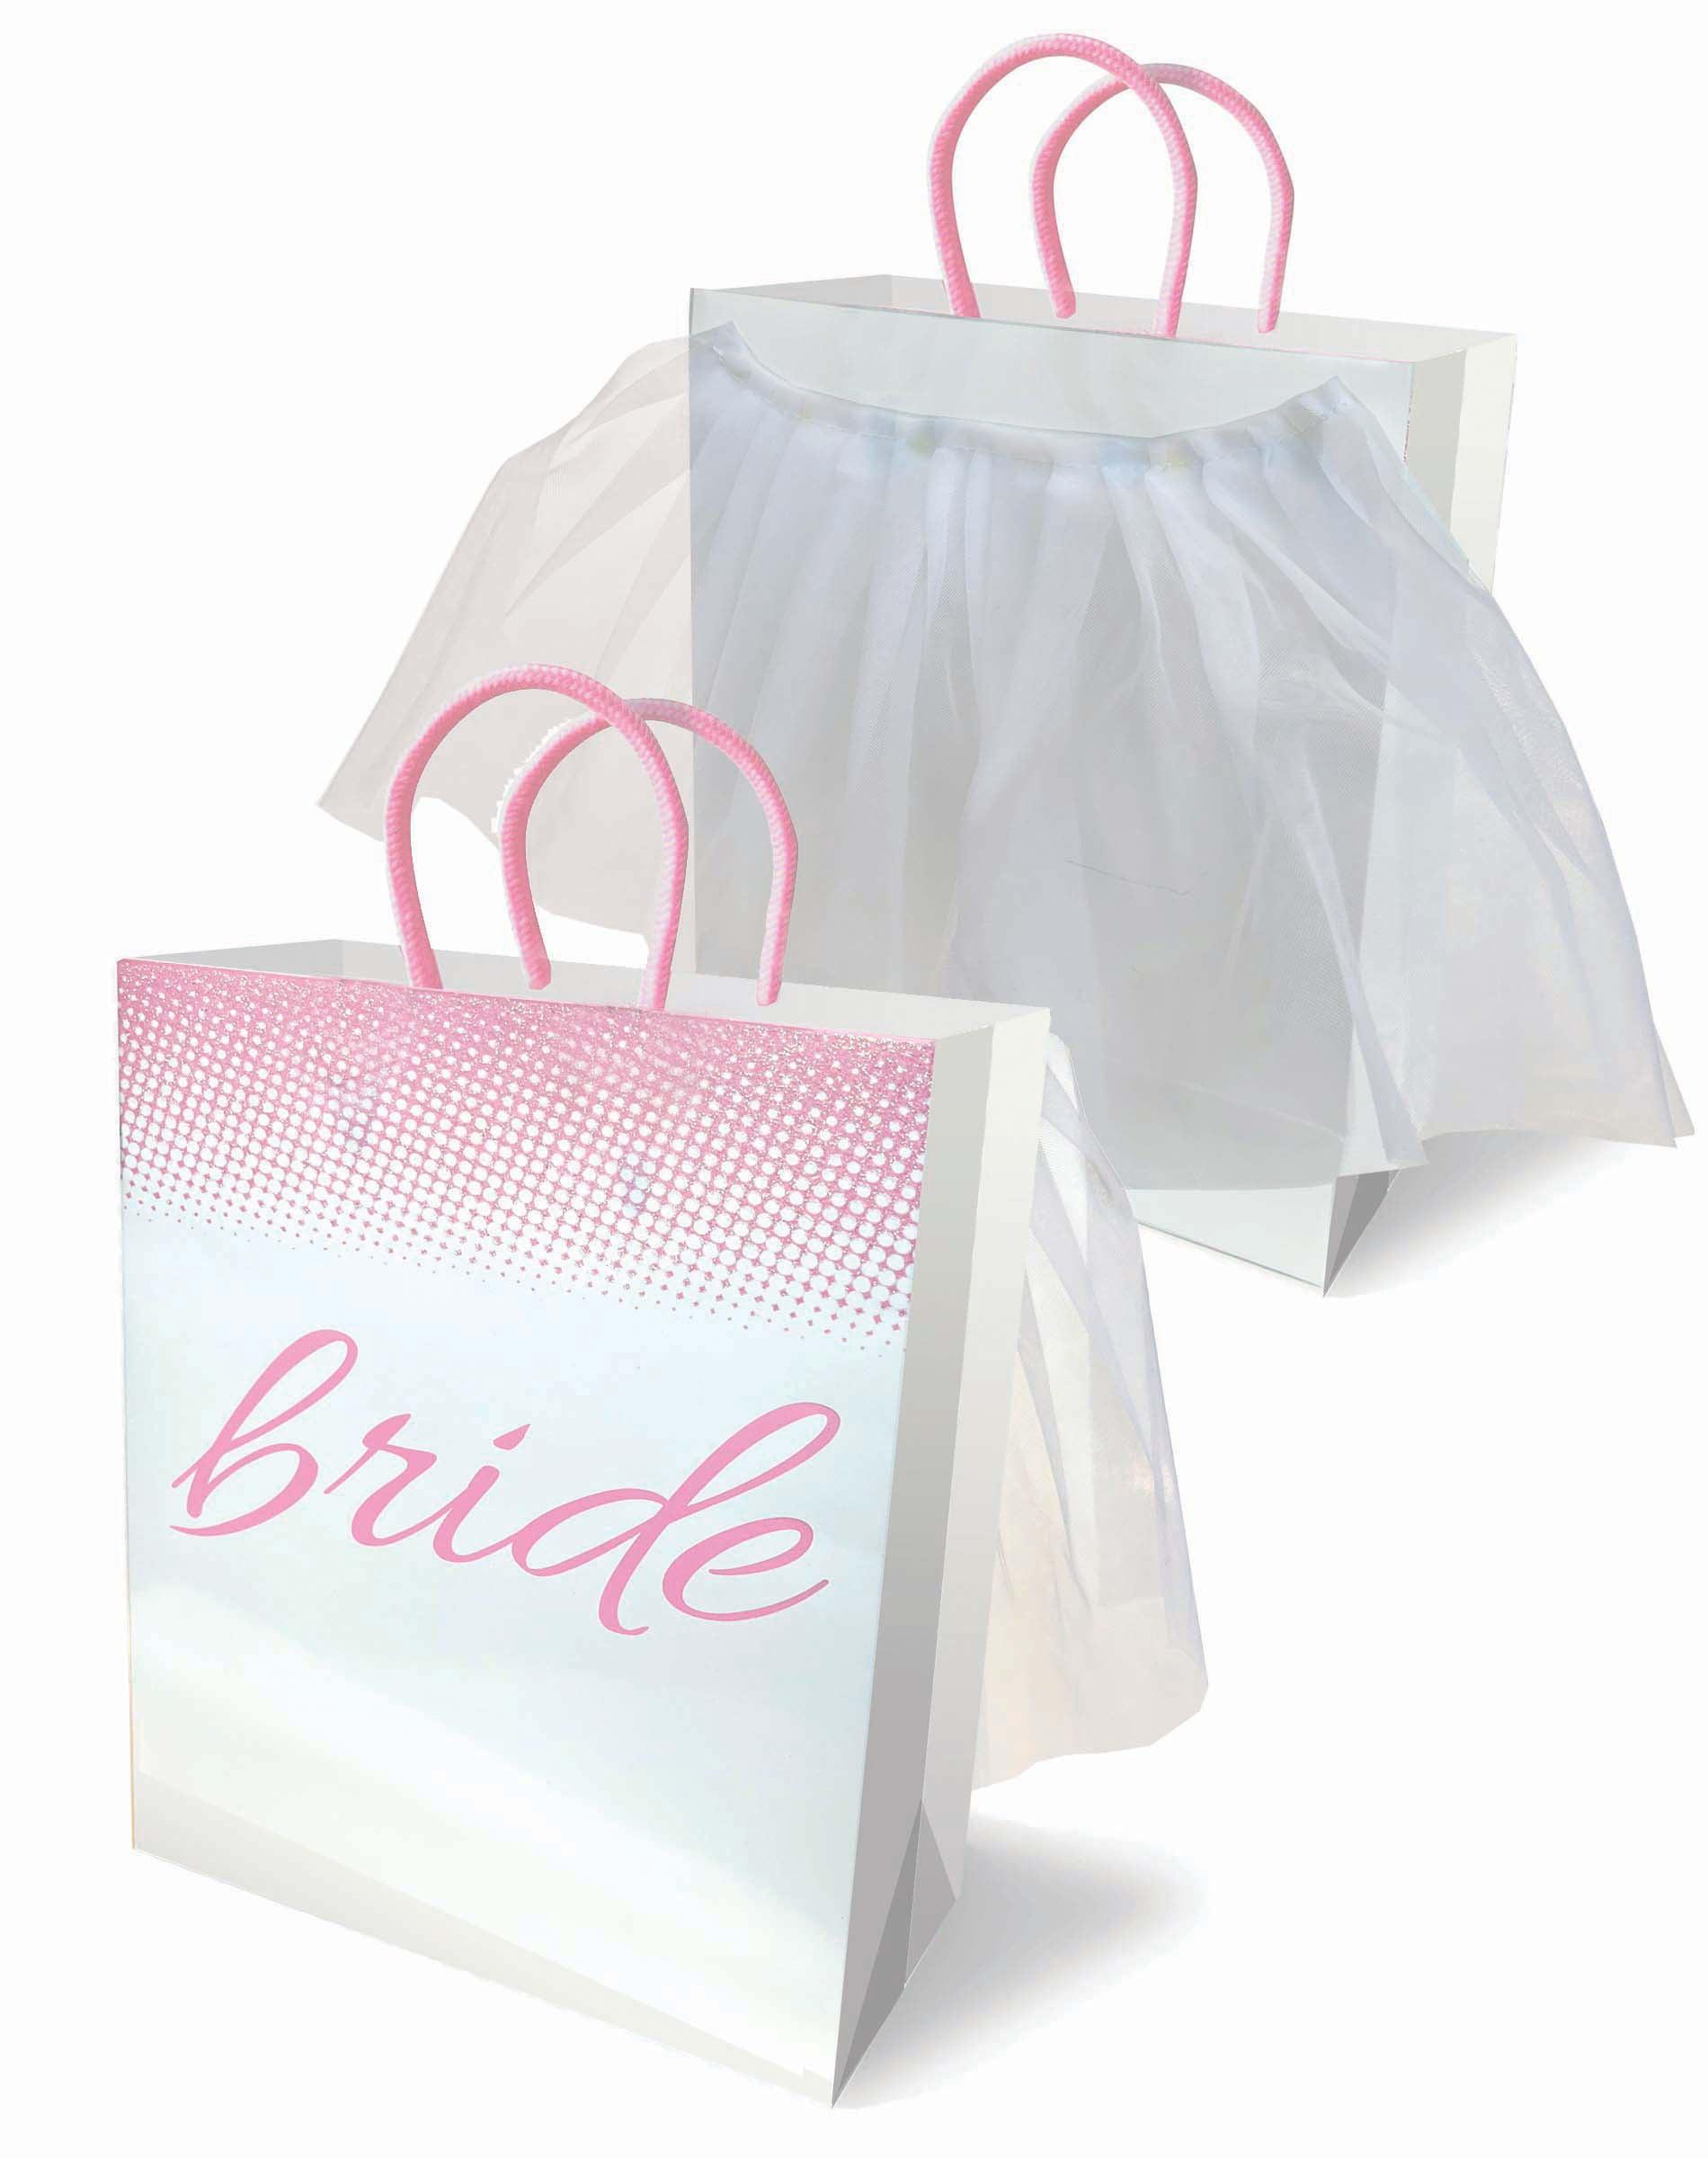 Bride Veil - Gift Bag - My Sex Toy Hub